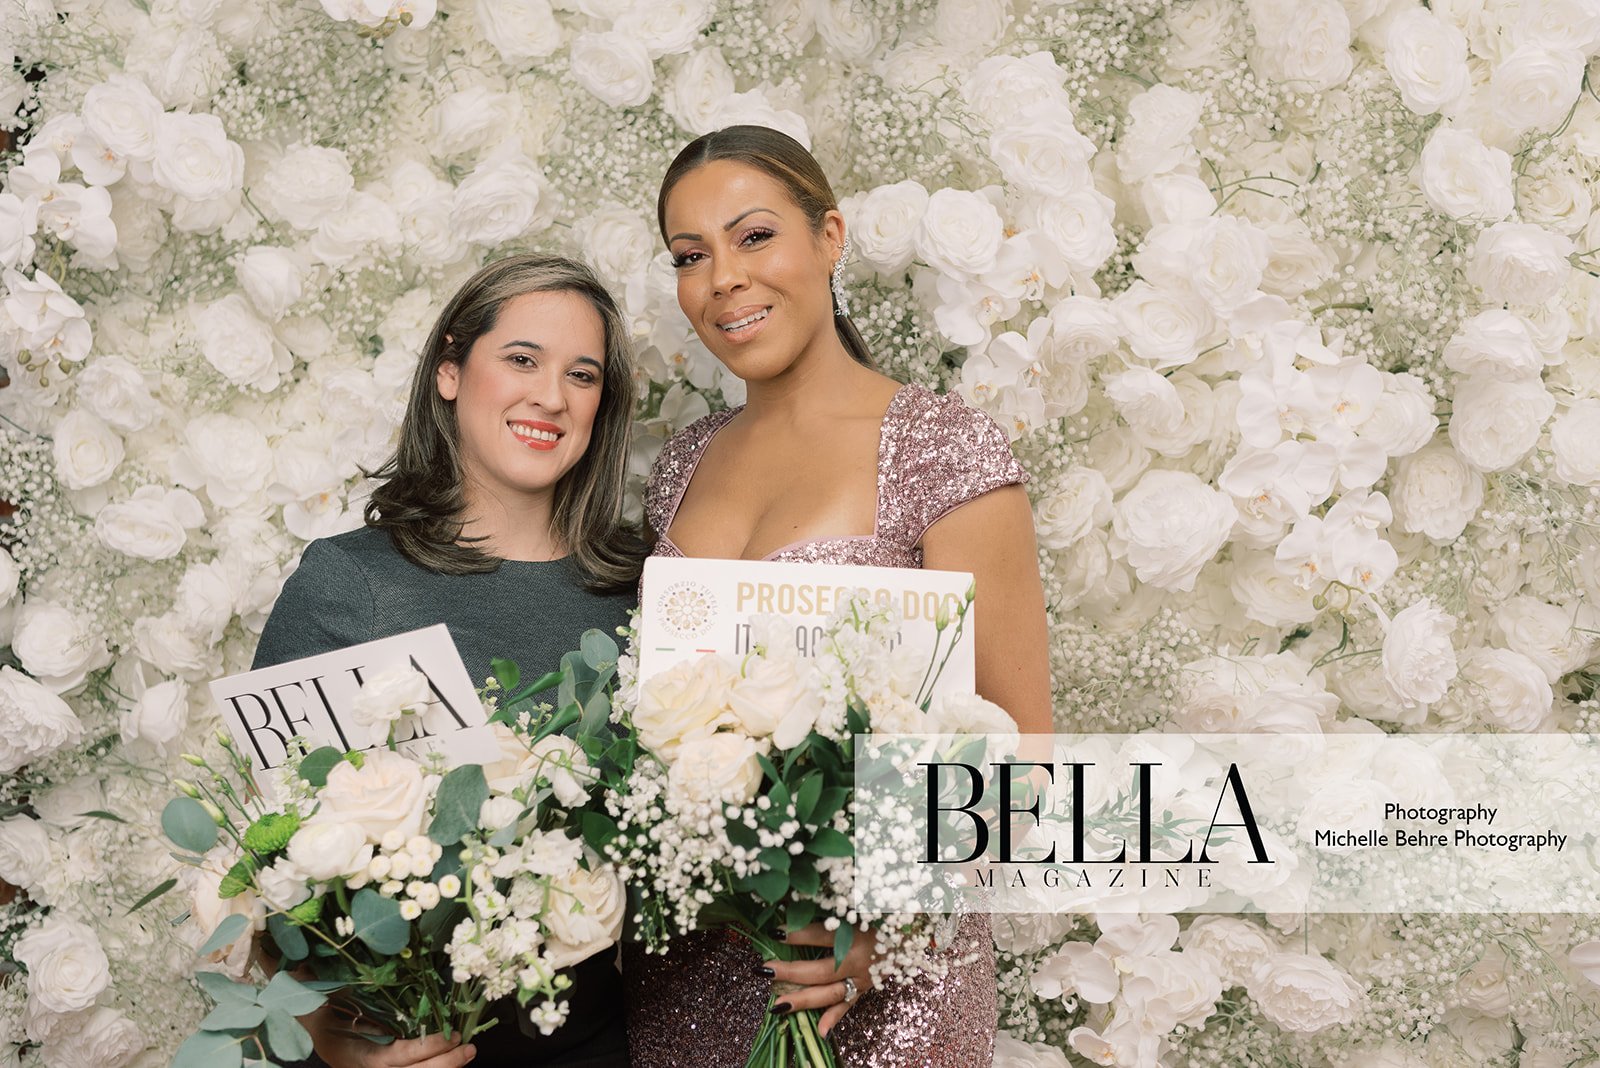 Michelle-Behre-Photography-BELLA-Magazine-Wedding-Event-La-Pulperia-New-York-41.jpg